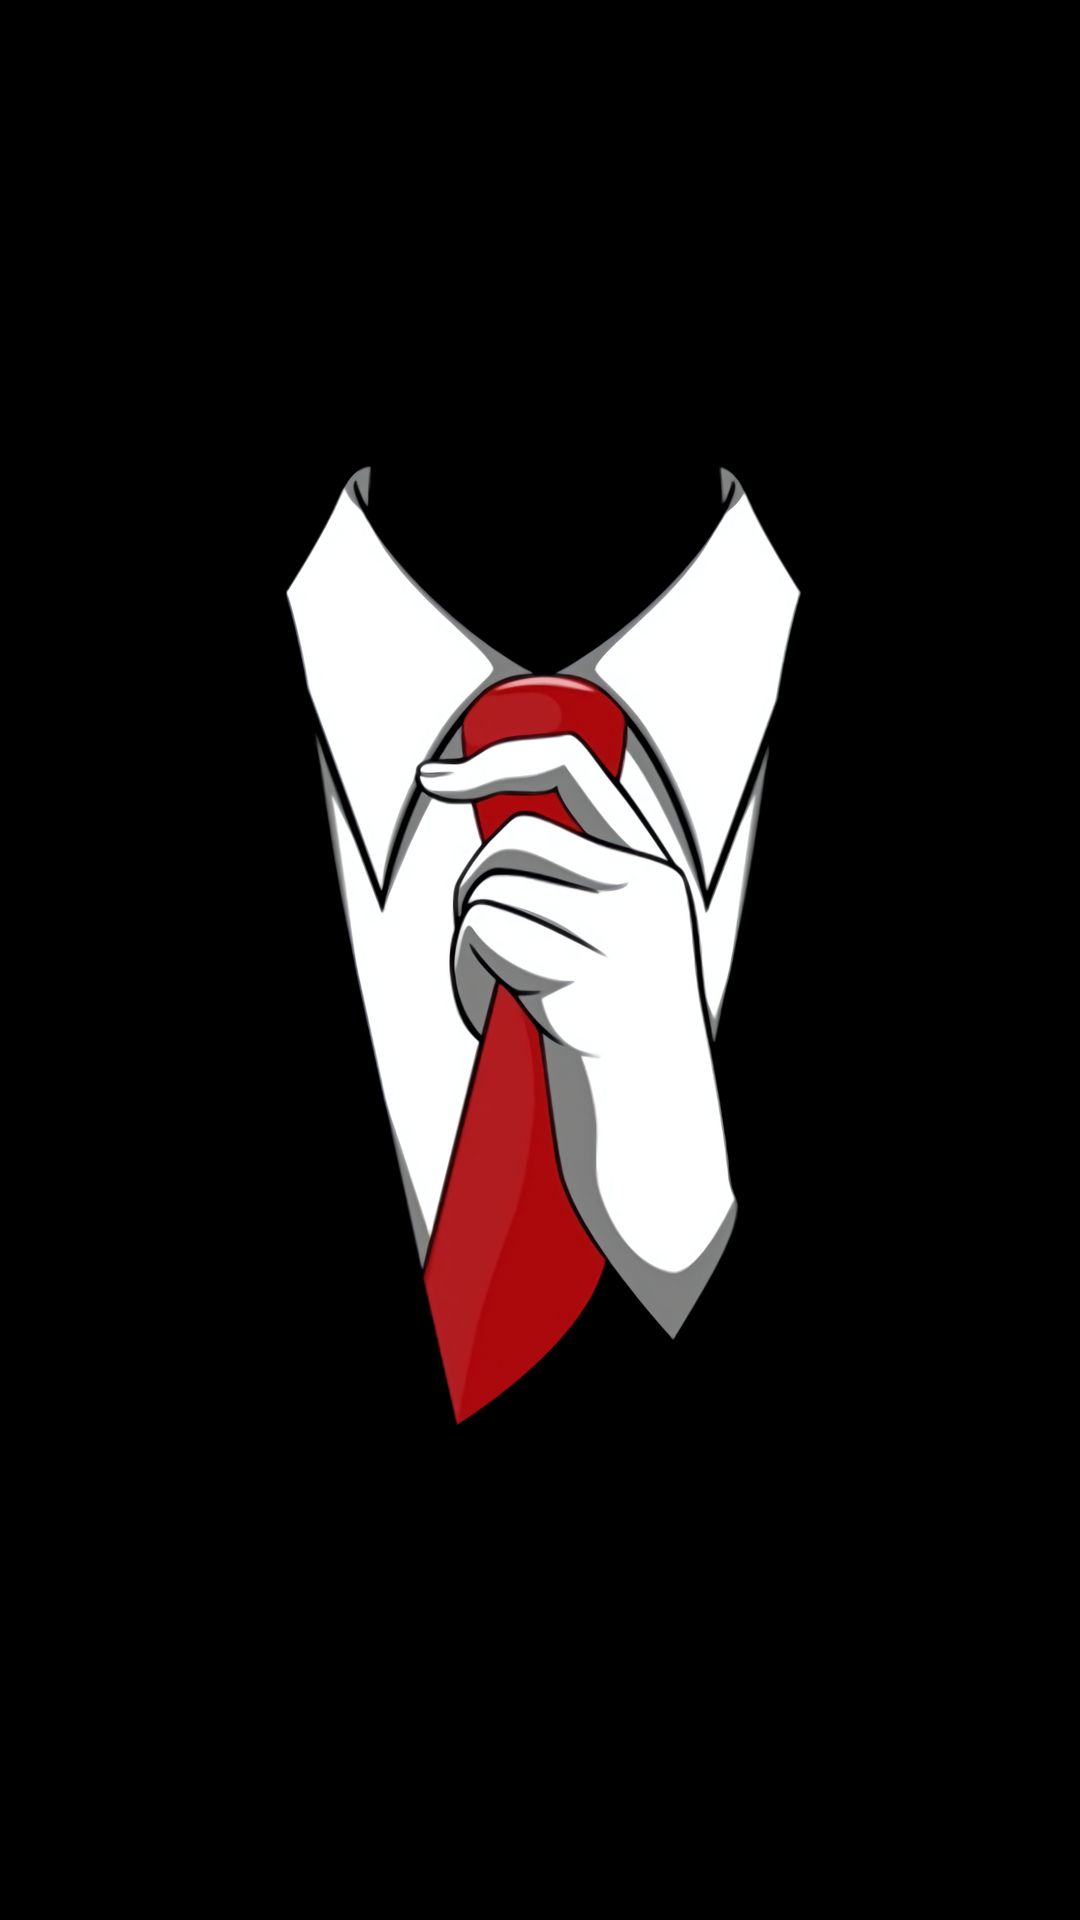 gentleman wallpaper hd,white,red,t shirt,product,illustration